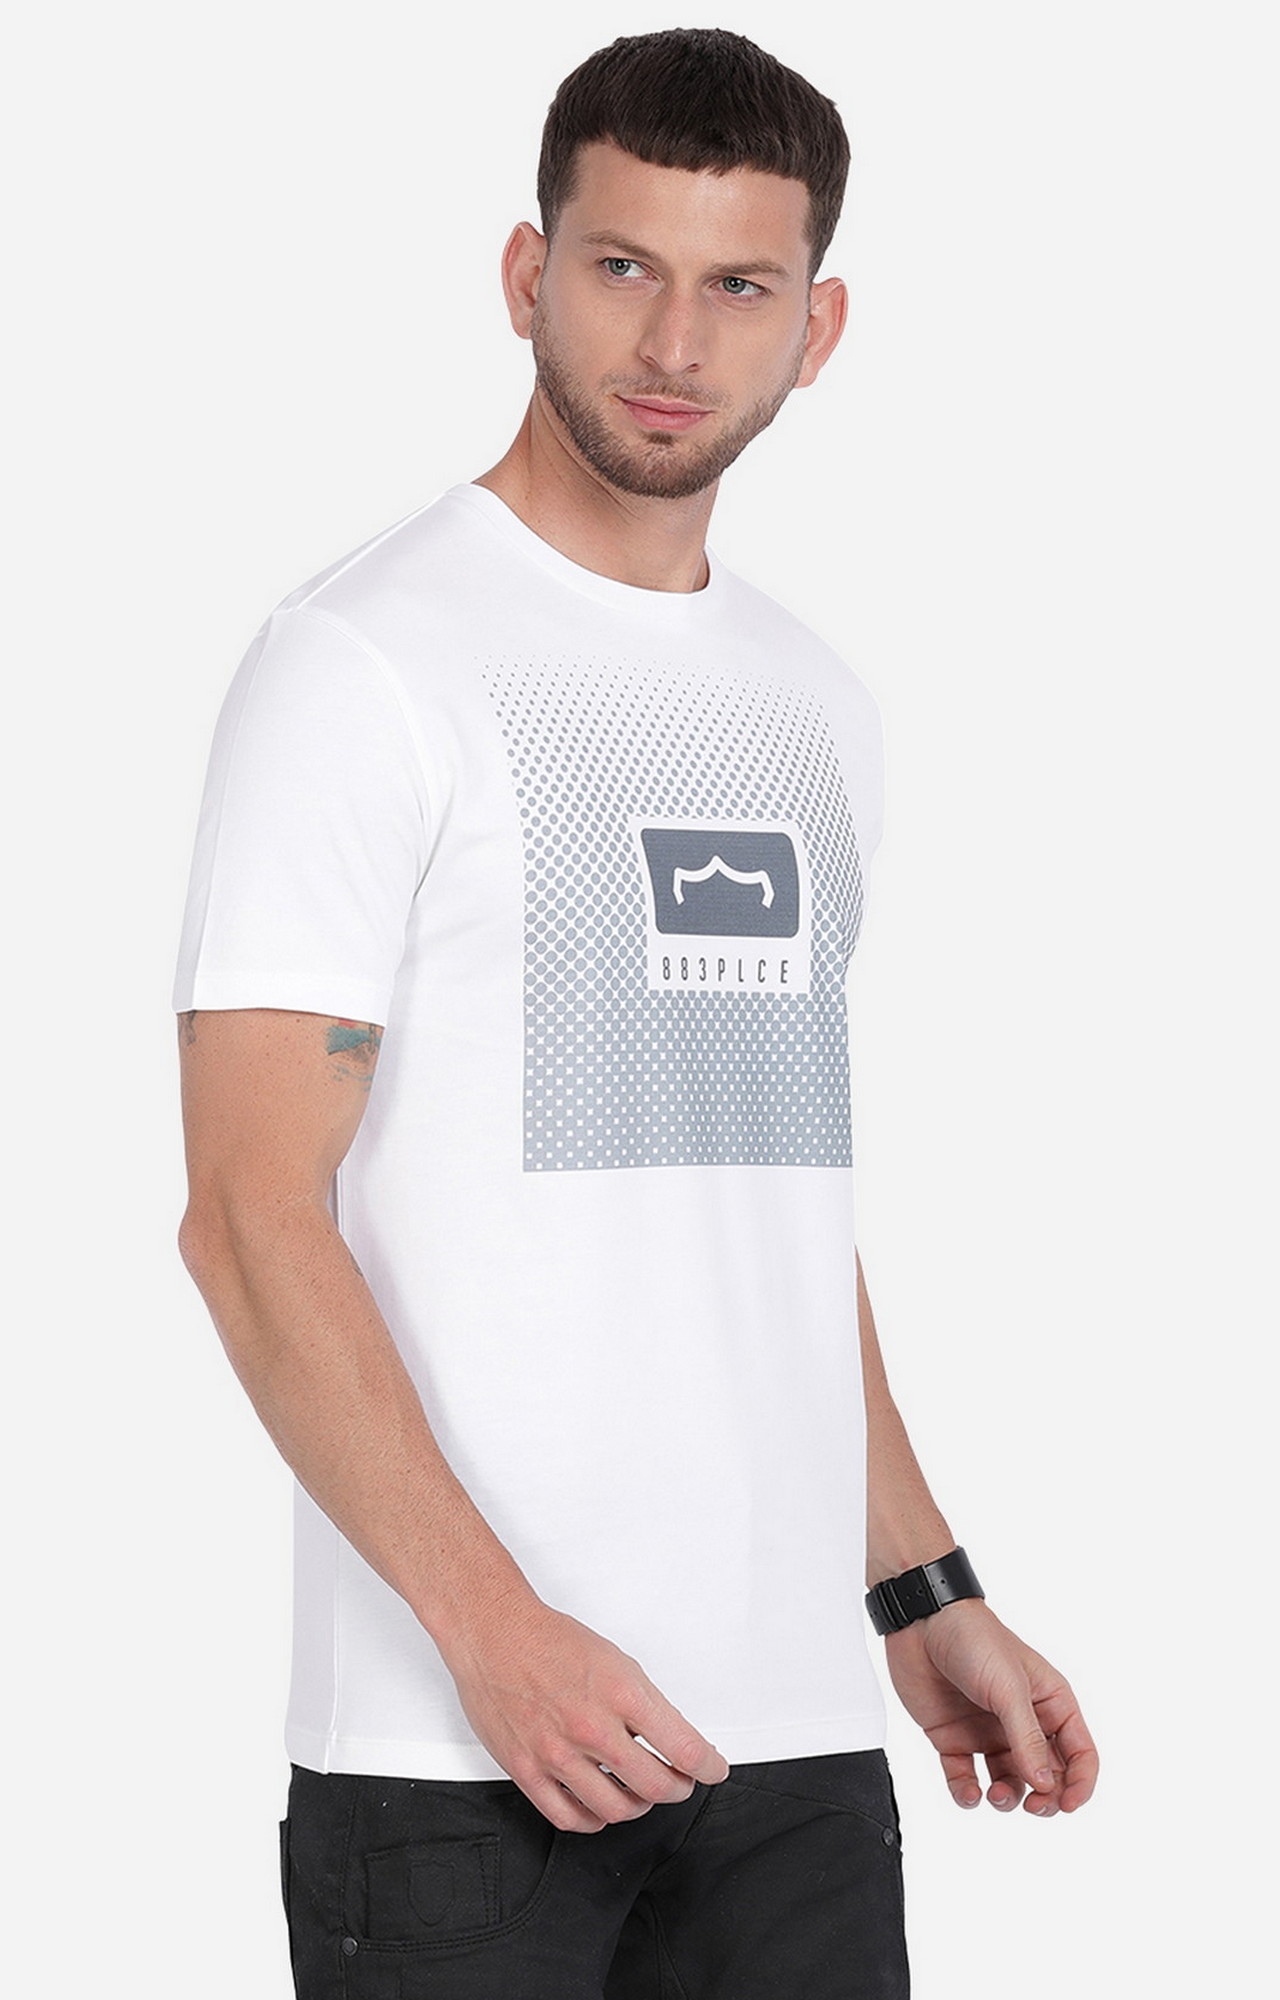 883 Police | Men's White Cotton Graphics T-Shirt 4